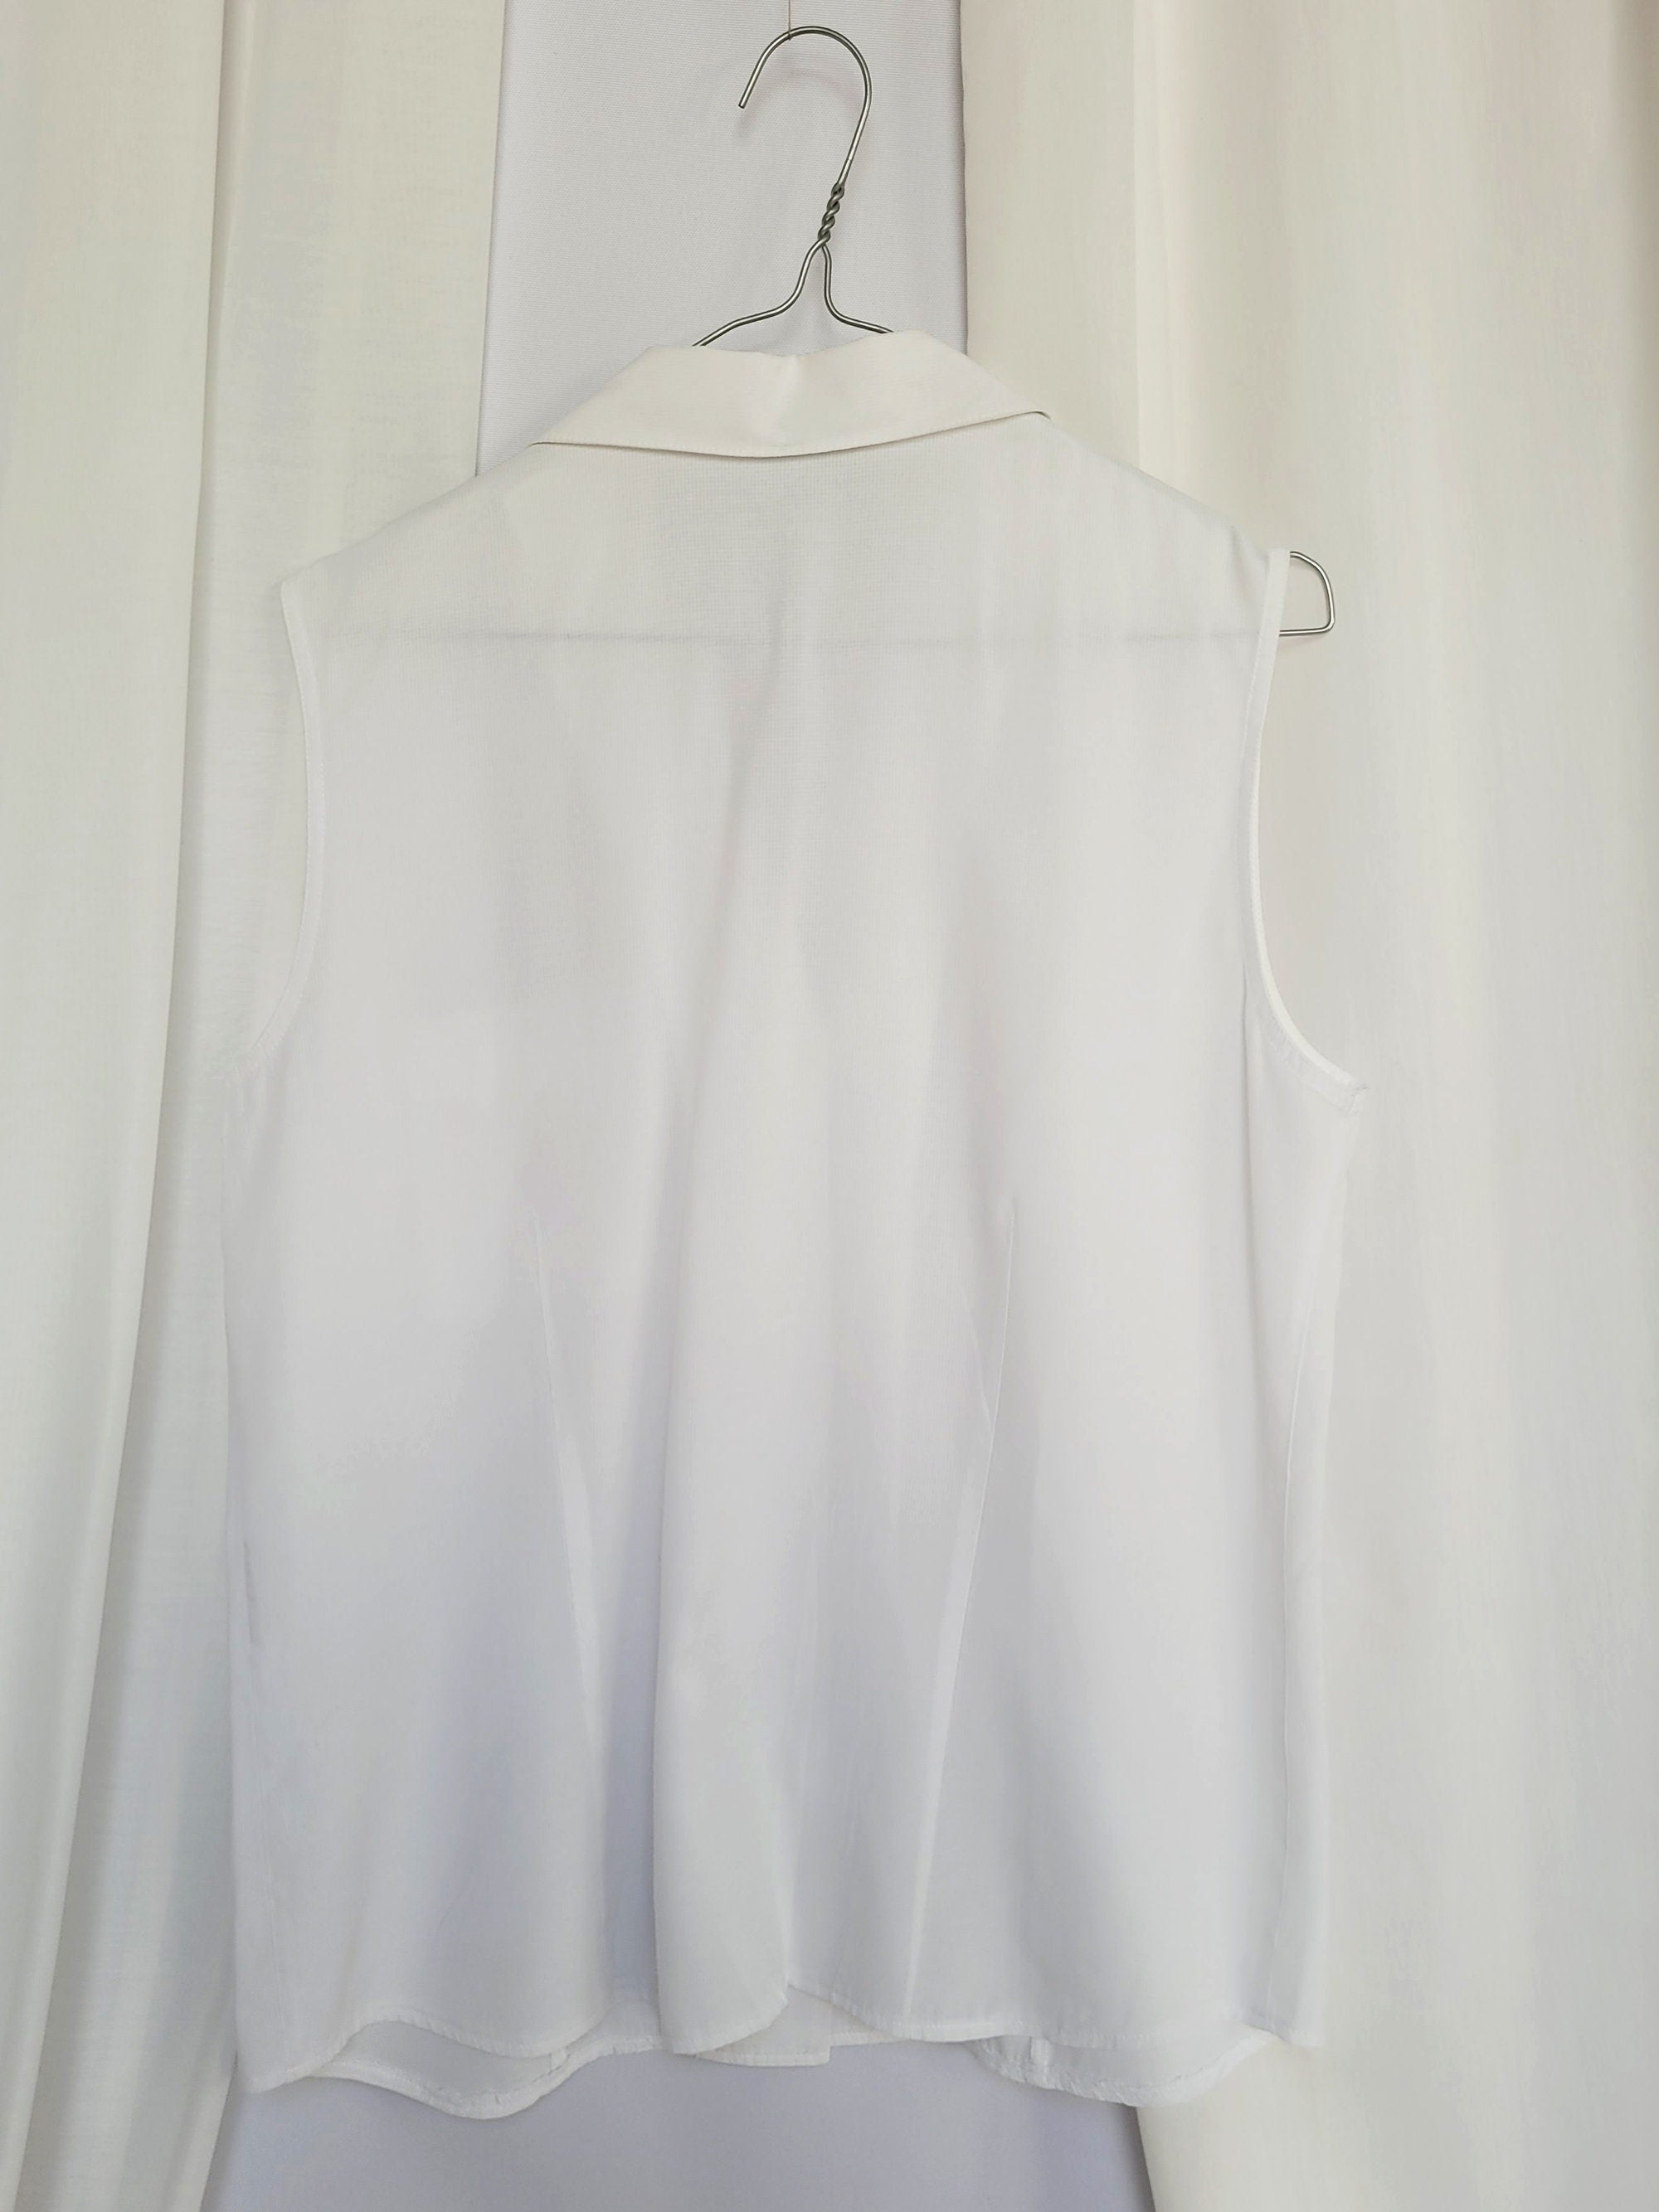 Retro 90s white minimalist sleeveless smart casual blouse